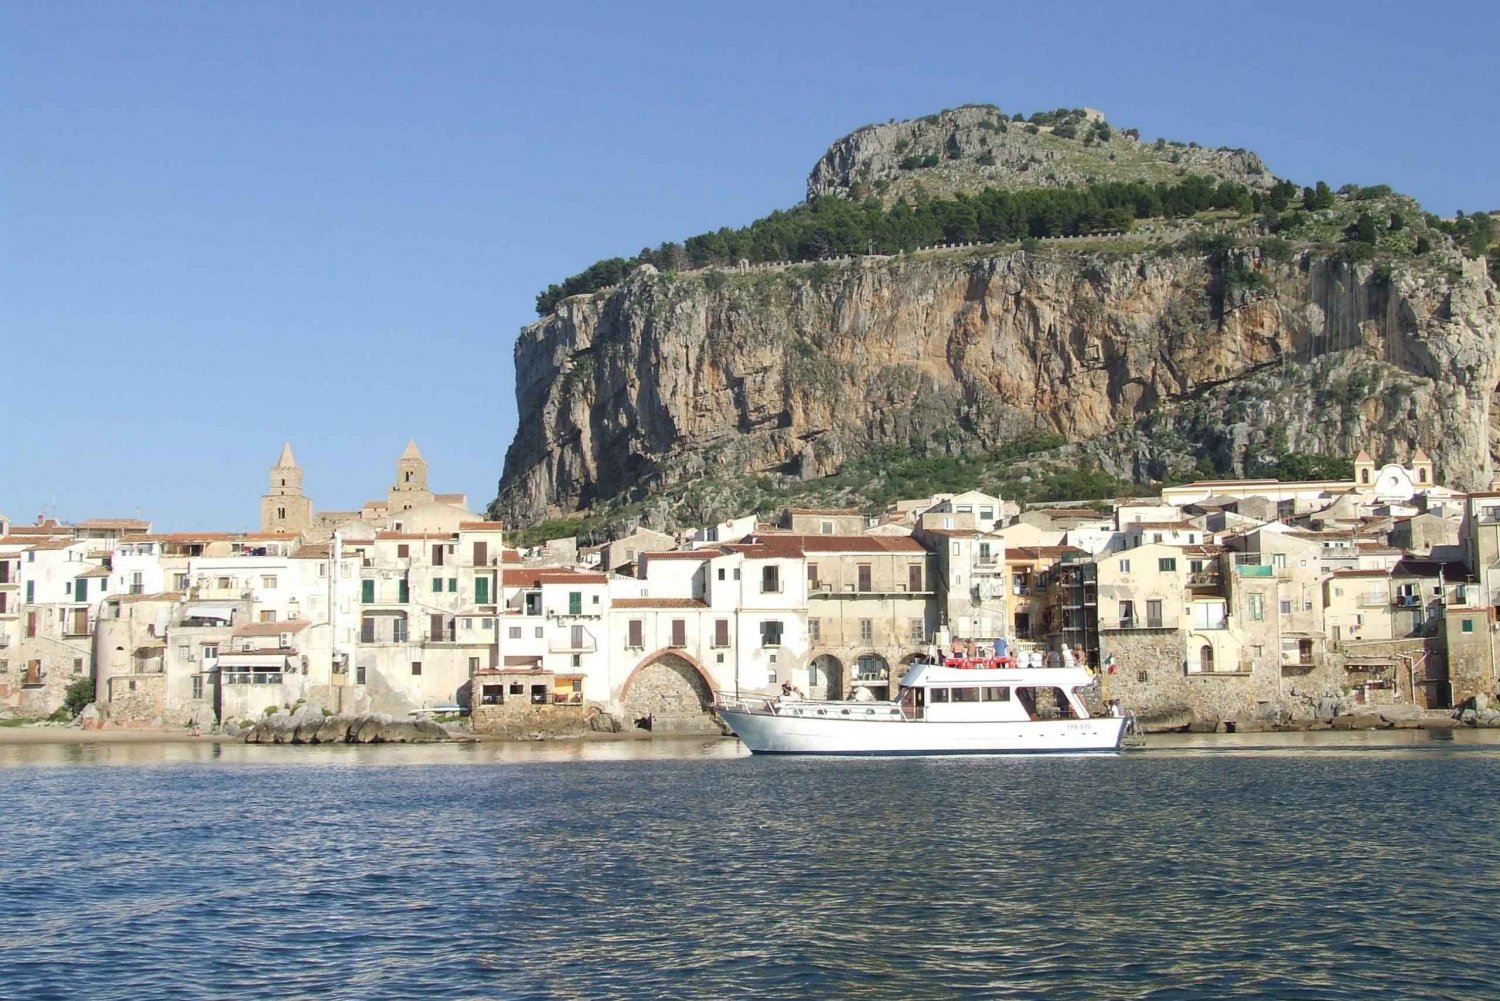 Fra Cefalù: Kyst til kyst ettermiddagstur med båttur